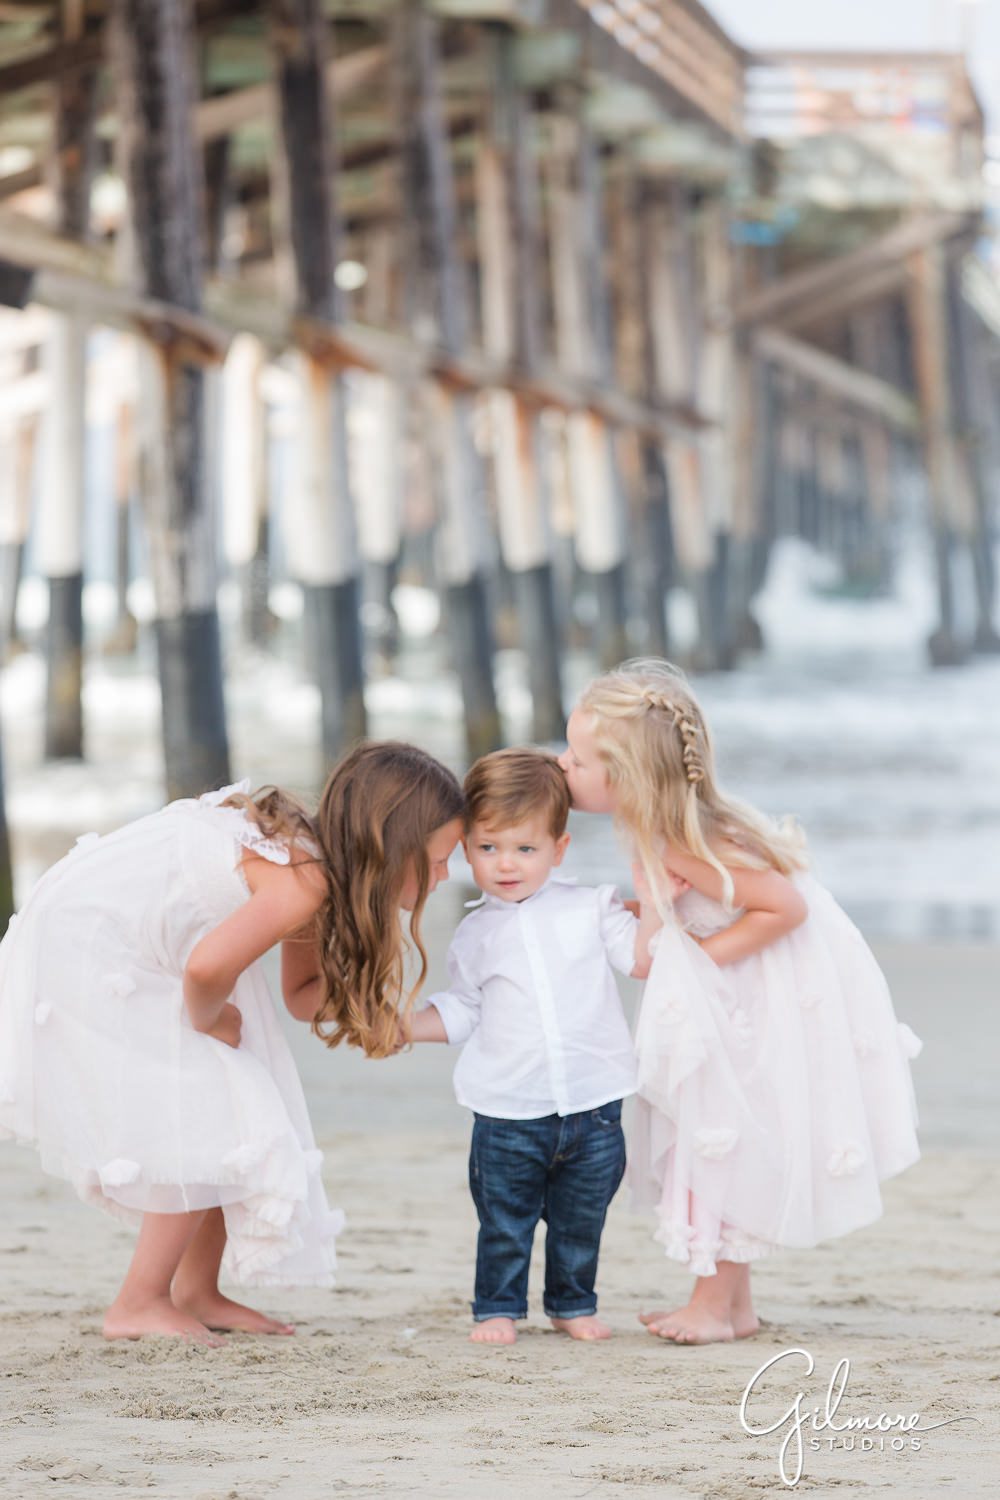 Family Photography Session - Newport Beach Pier, children's portrait photographer, orange county